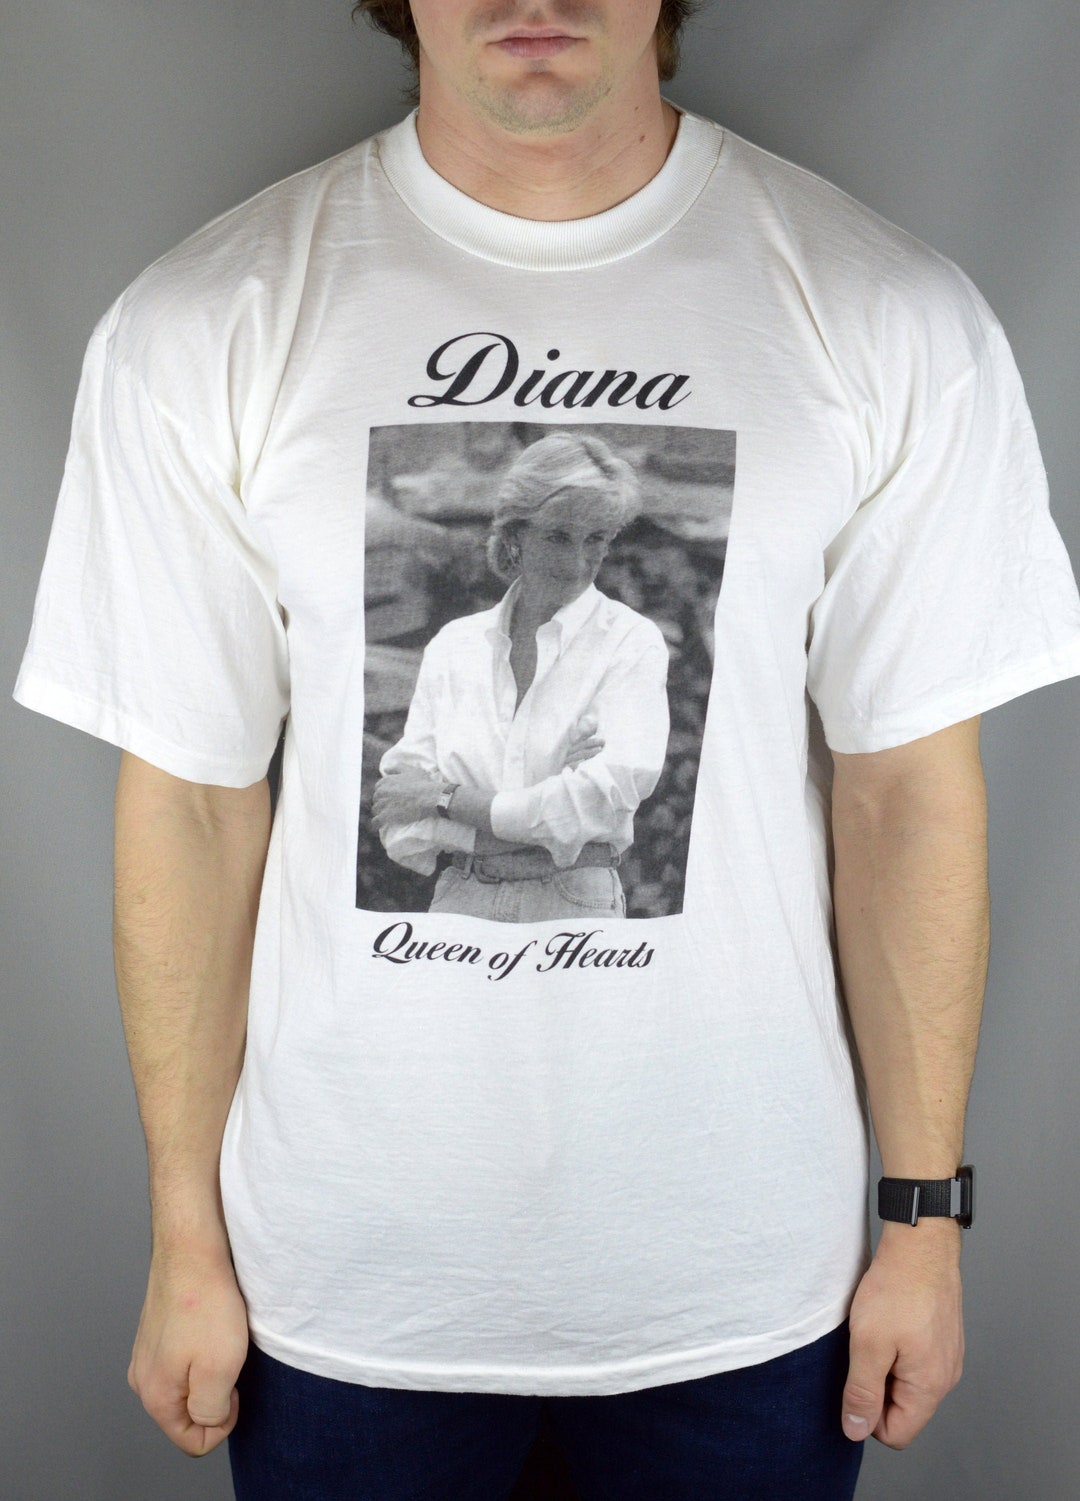 ZeeyaShop Princess Diana Shirt, Queen of The Hearts Shirt, Princess Diana Vintage T-Shirt